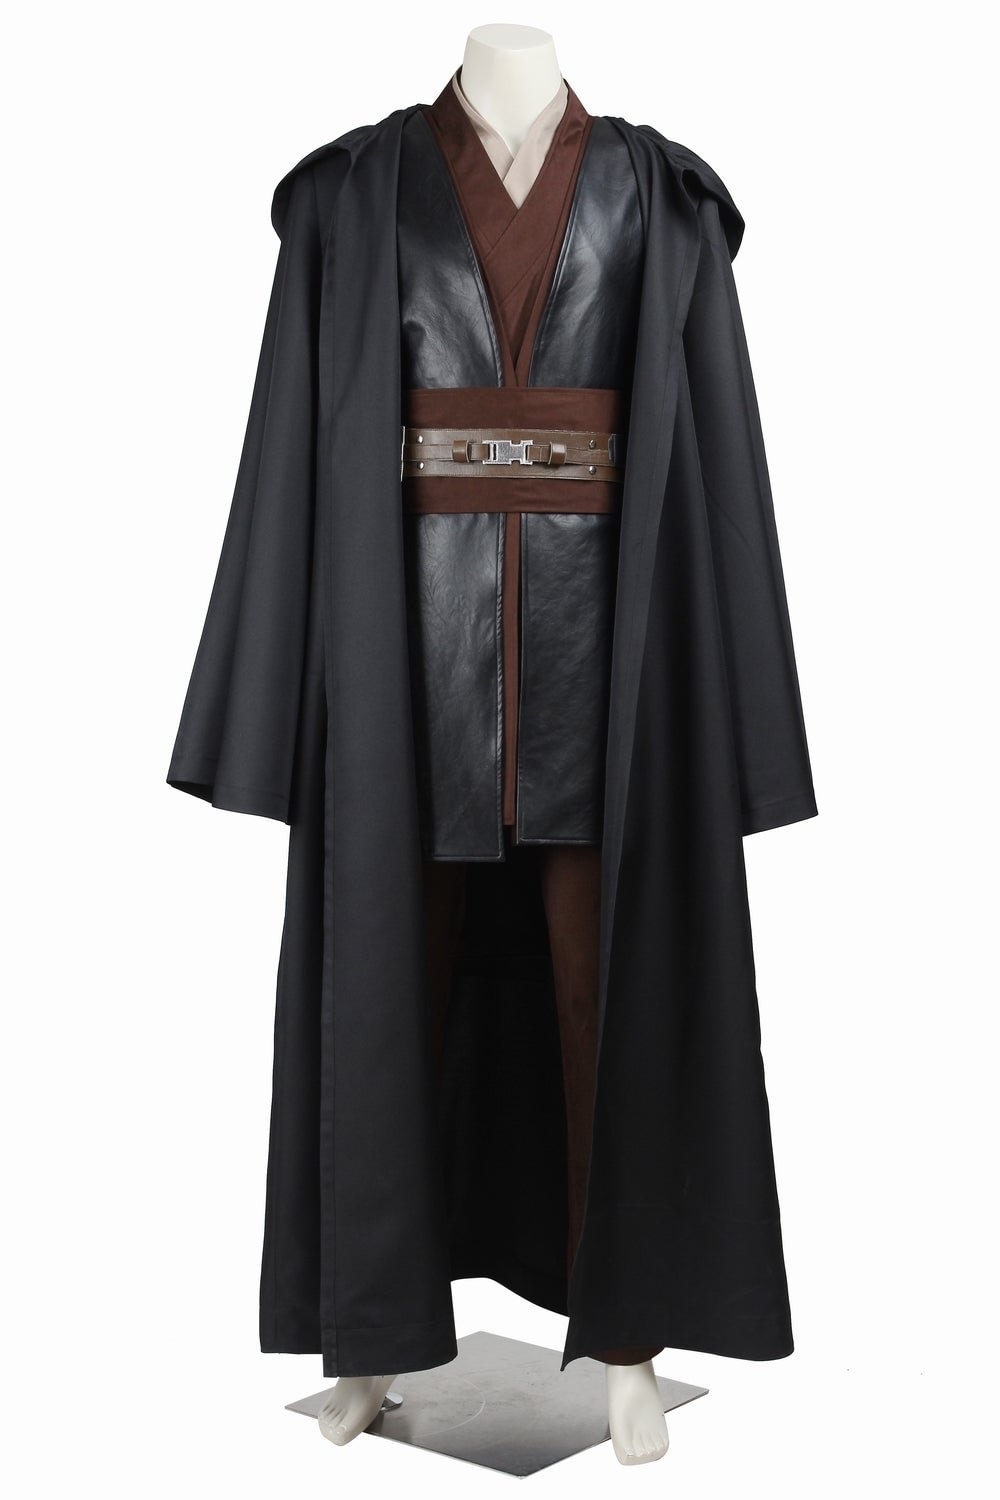 Star Wars Anakin Skywalker Cosplay Costume Classic Black Suit